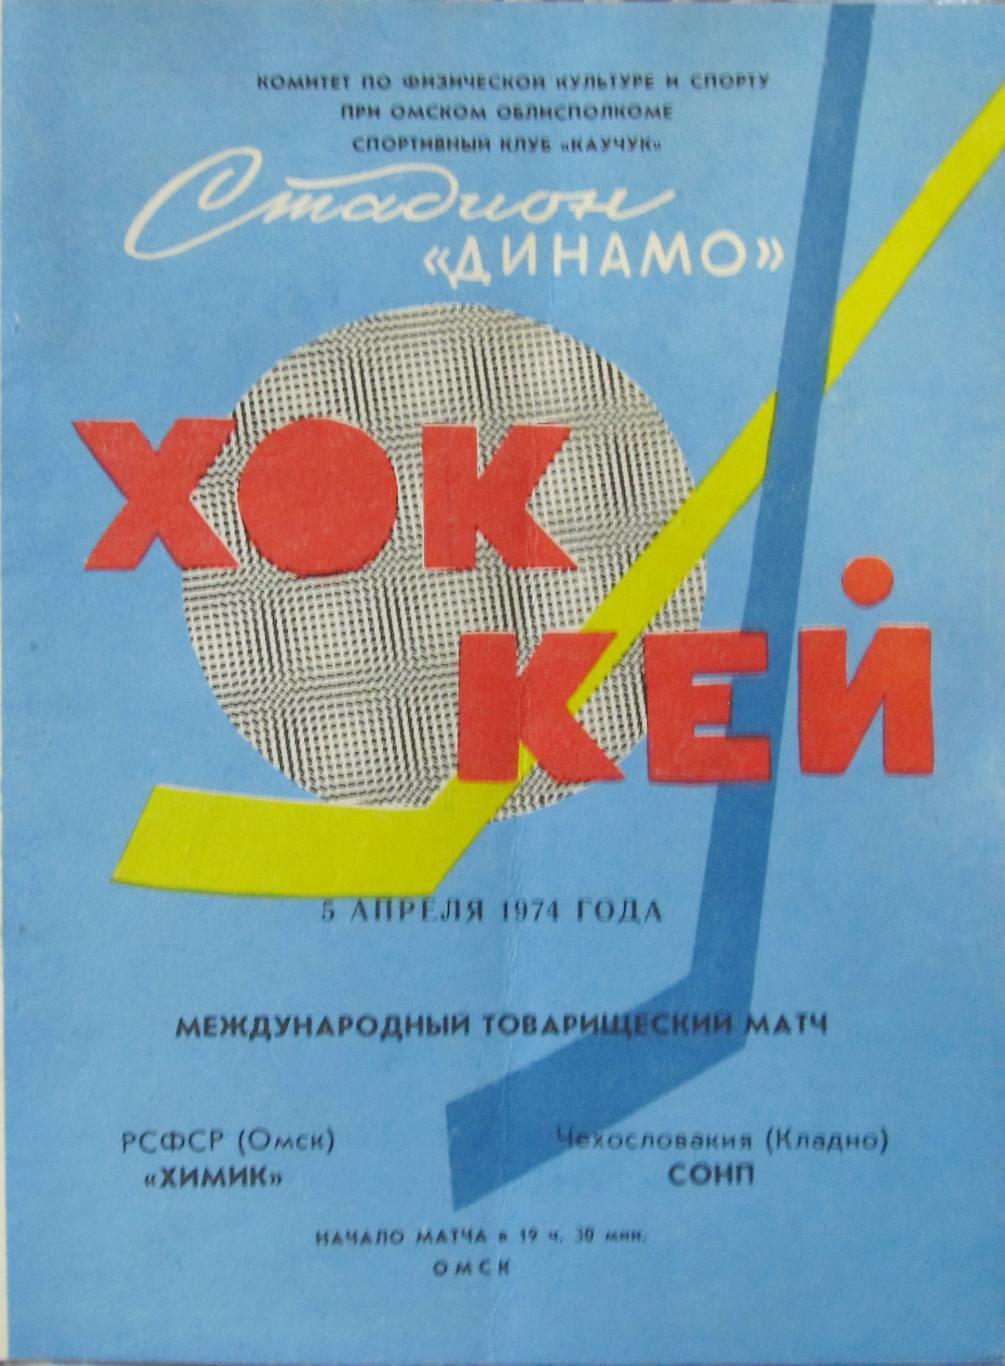 Химик ( Омск ) - СОНП ( Кладно ) 5.04.1974 МТМ